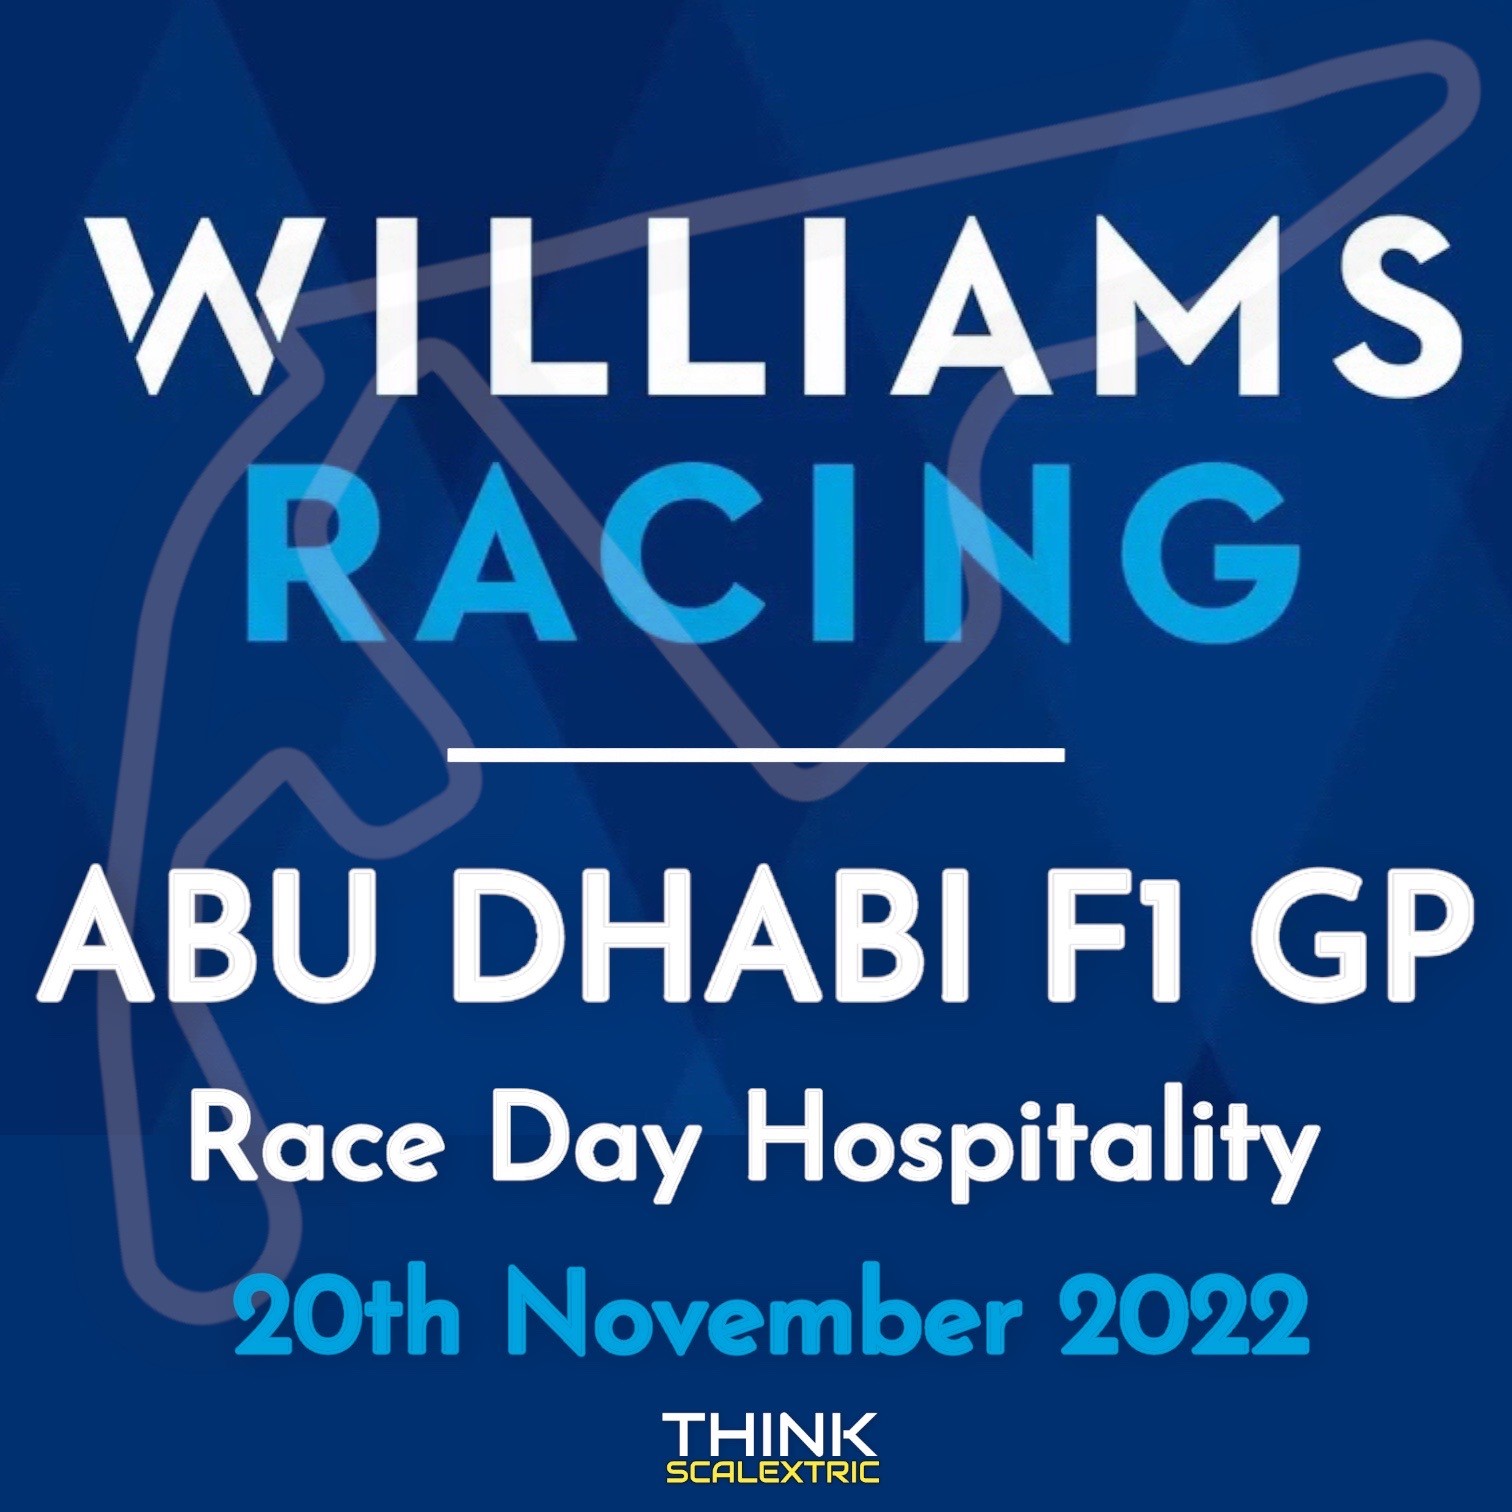 williams racing race day hospitality abu dhabi f1 gp 2022 giant scalextric bespoke track build